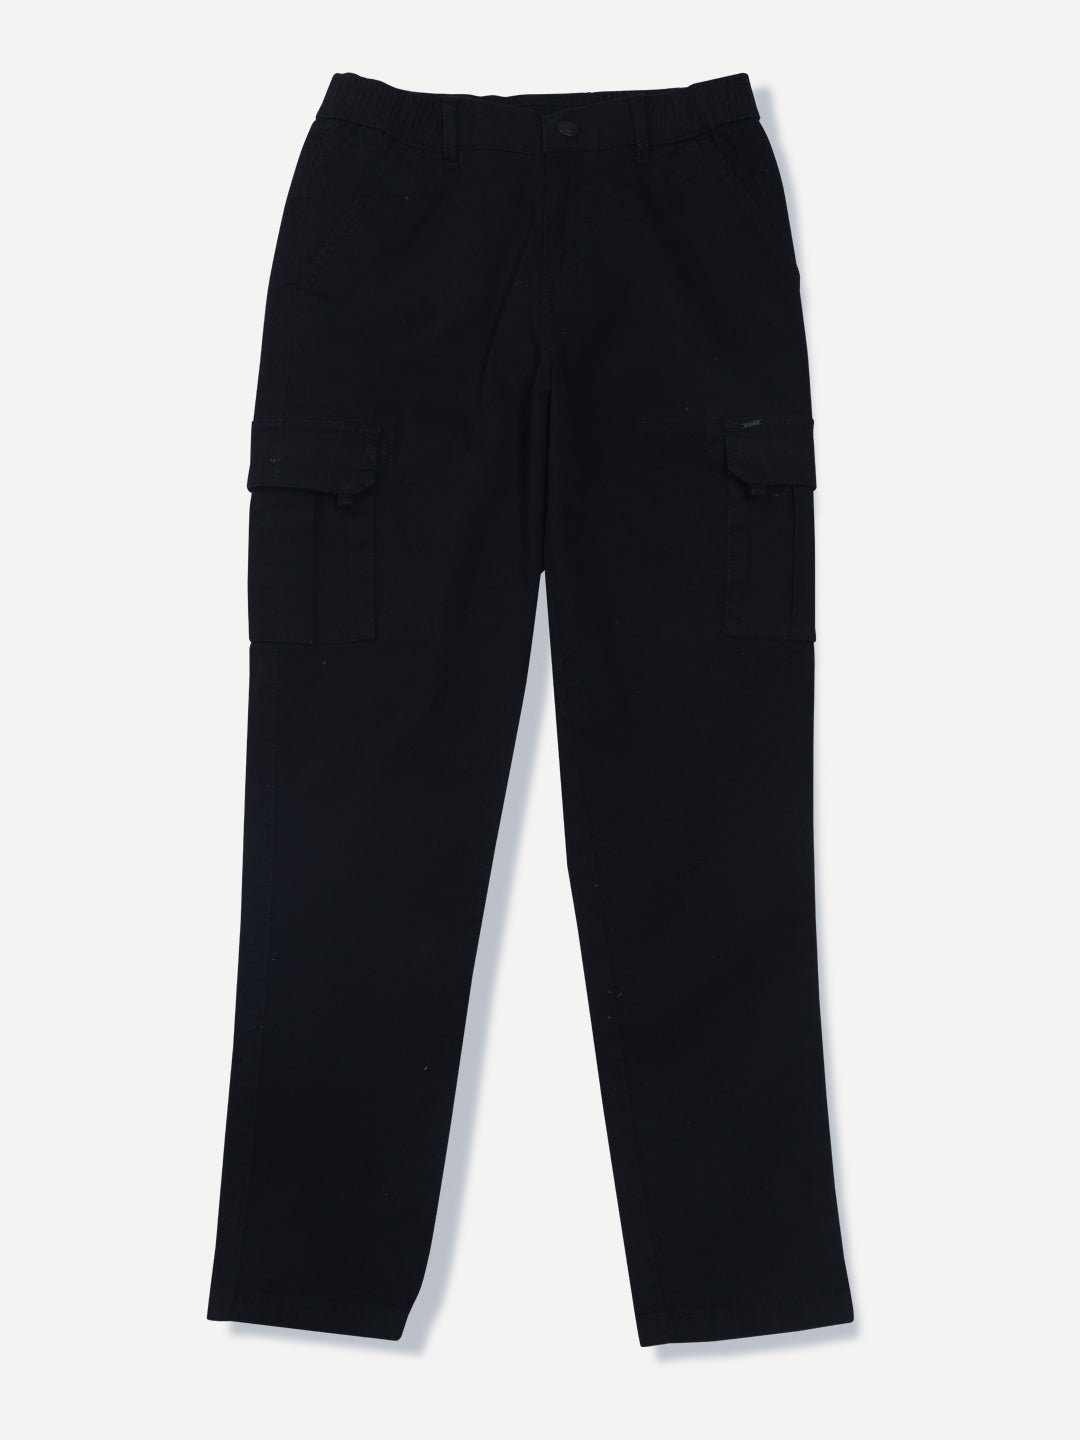 Buy MINIKLUB Kids Black & White Shirt, Waistcoat with Pants for Boys  Clothing Online @ Tata CLiQ